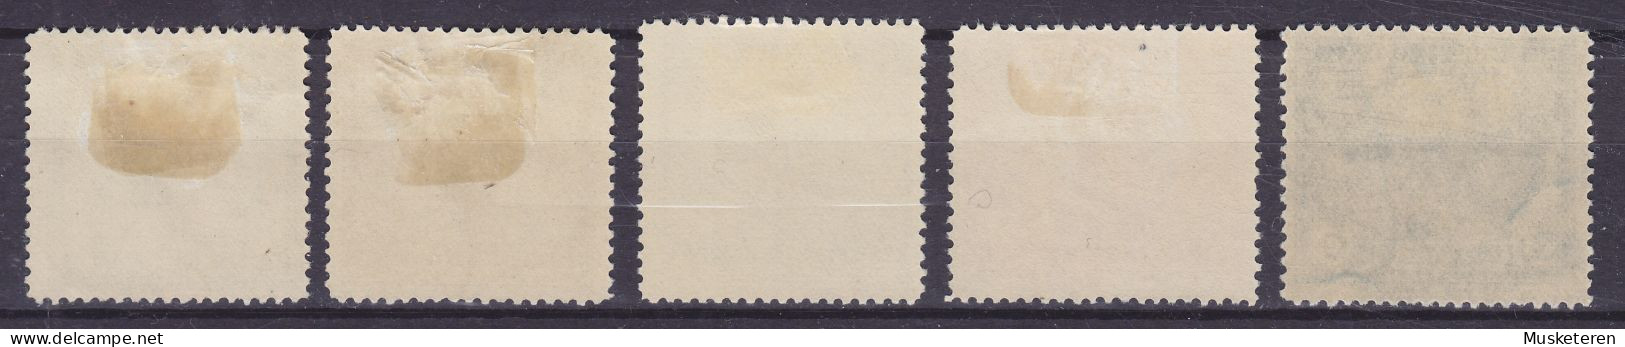 Belgian Congo 1923/24 Mi. 67-69, 71-72, Baluba-Frau, Babuende-Frau, Holzarbeiter, Ubangi-Mann, Bogenschütze, MH* - Neufs